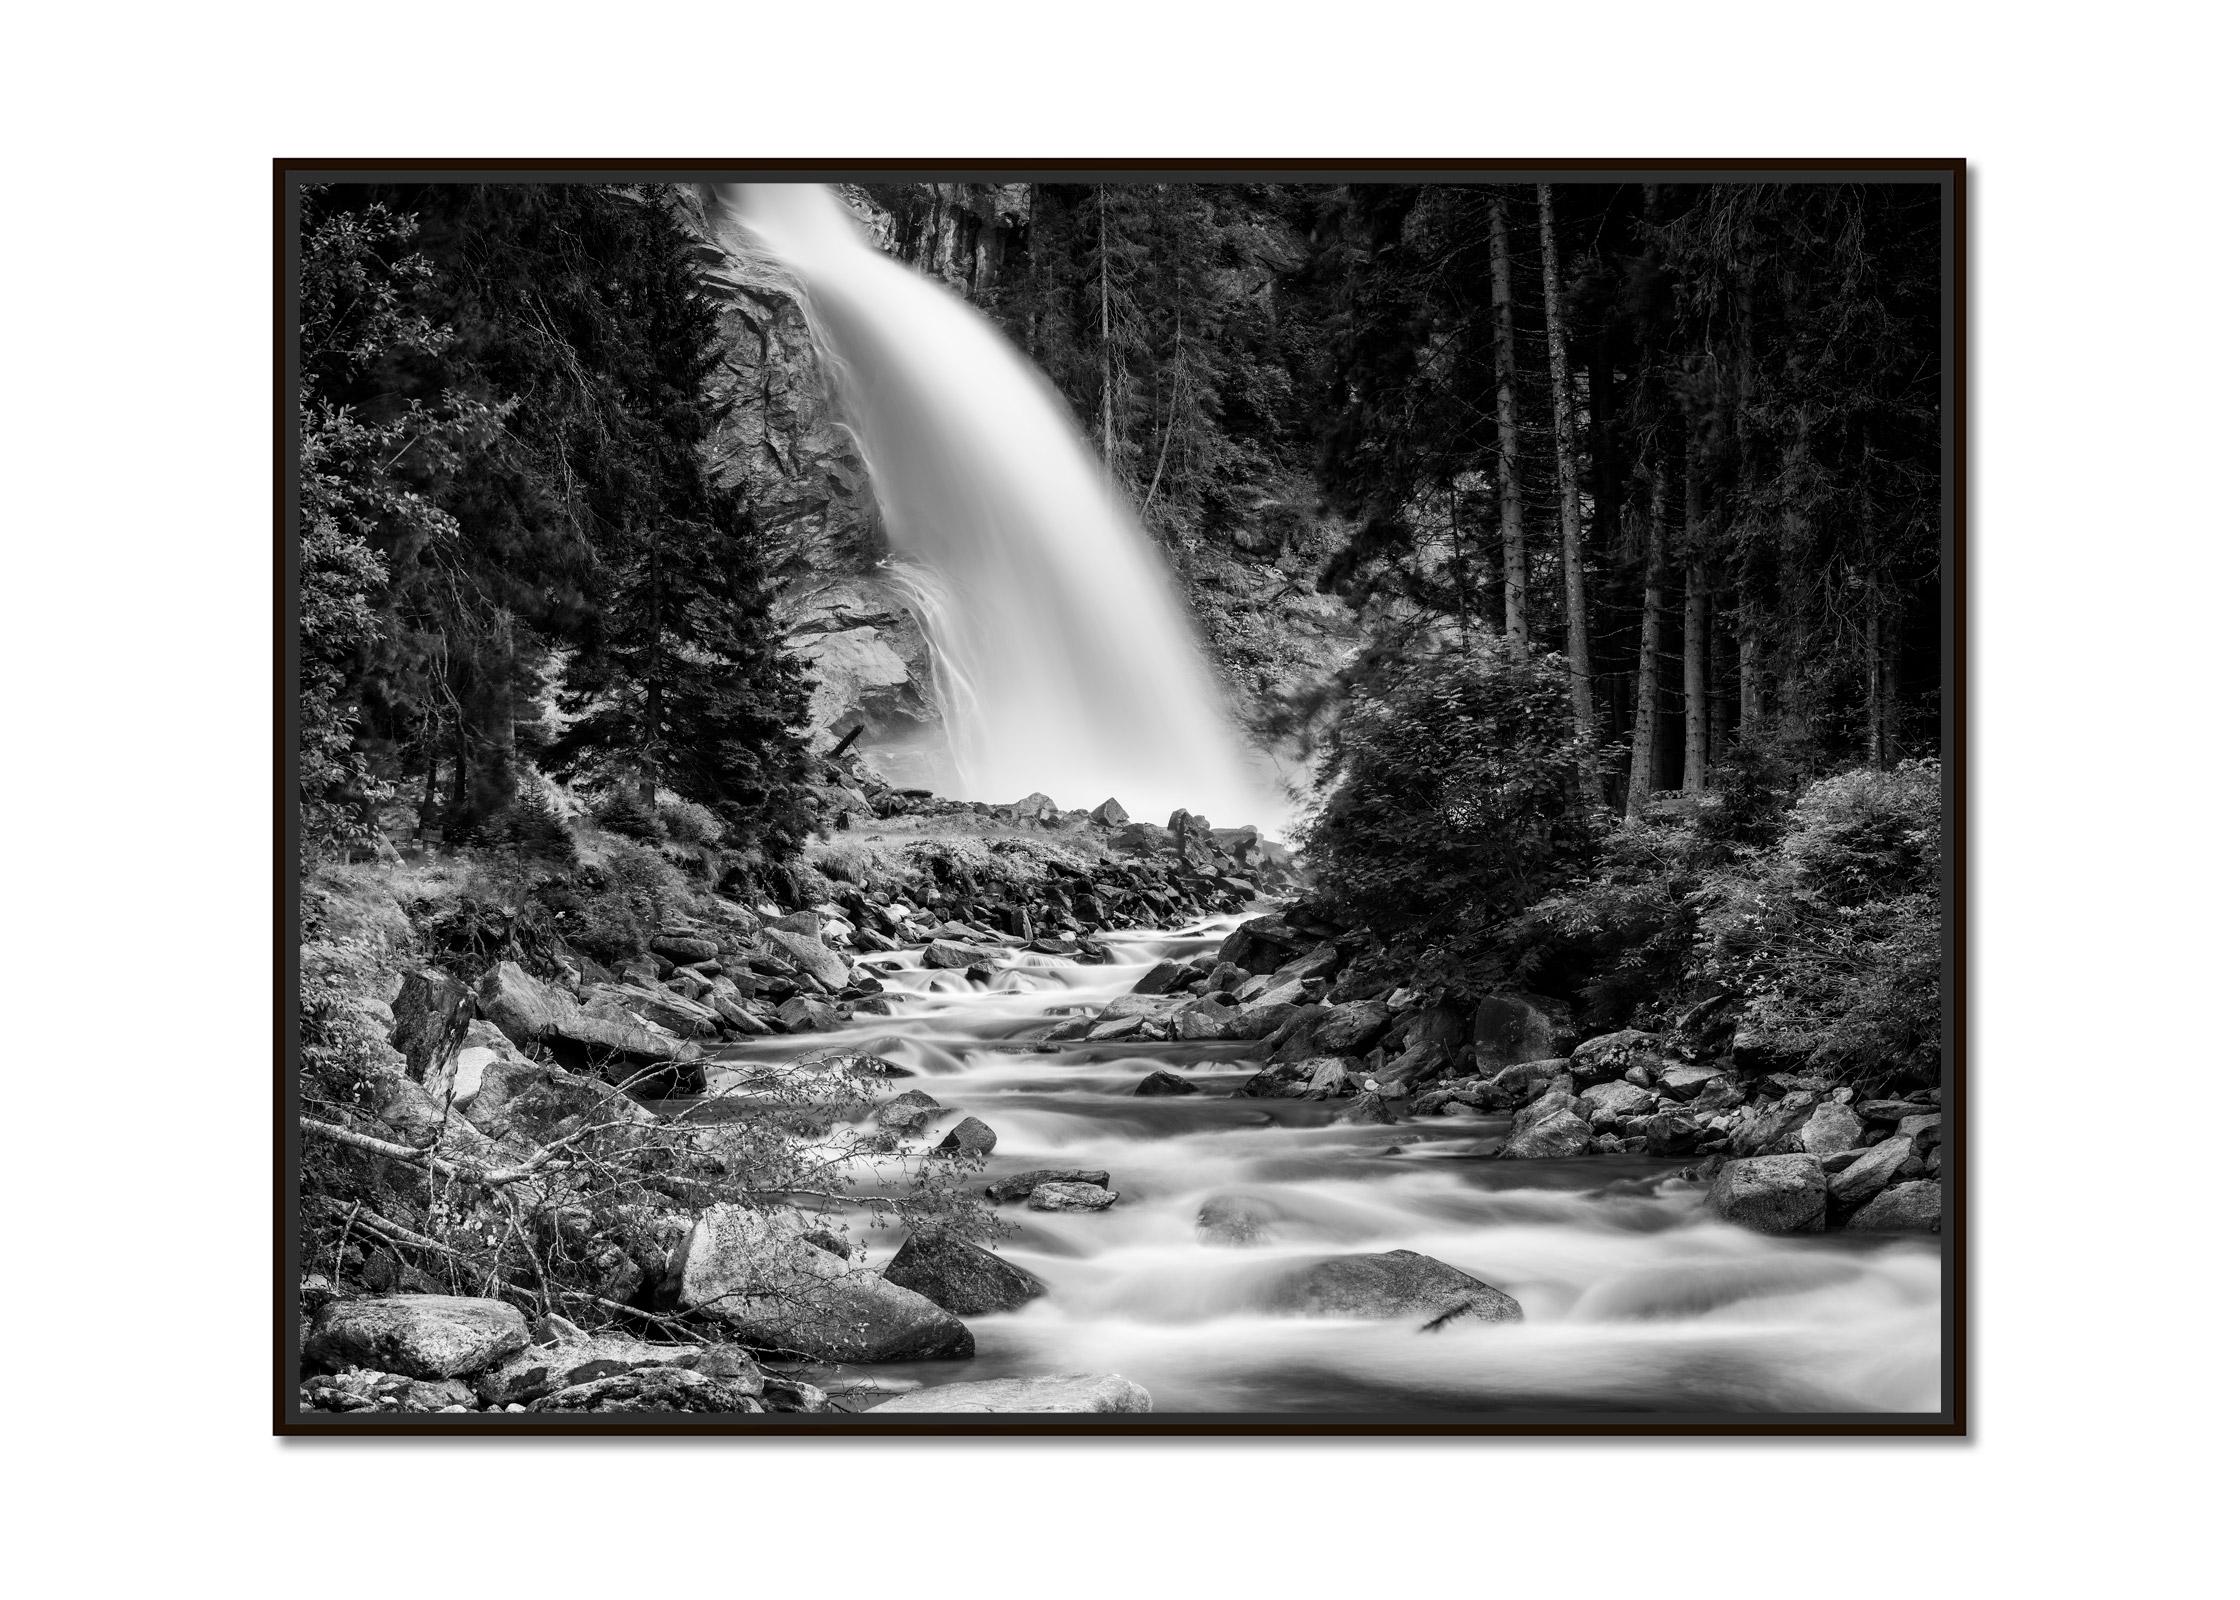 Krimmler Waterfall, mountain stream, black and white art photography, landscape - Photograph by Gerald Berghammer